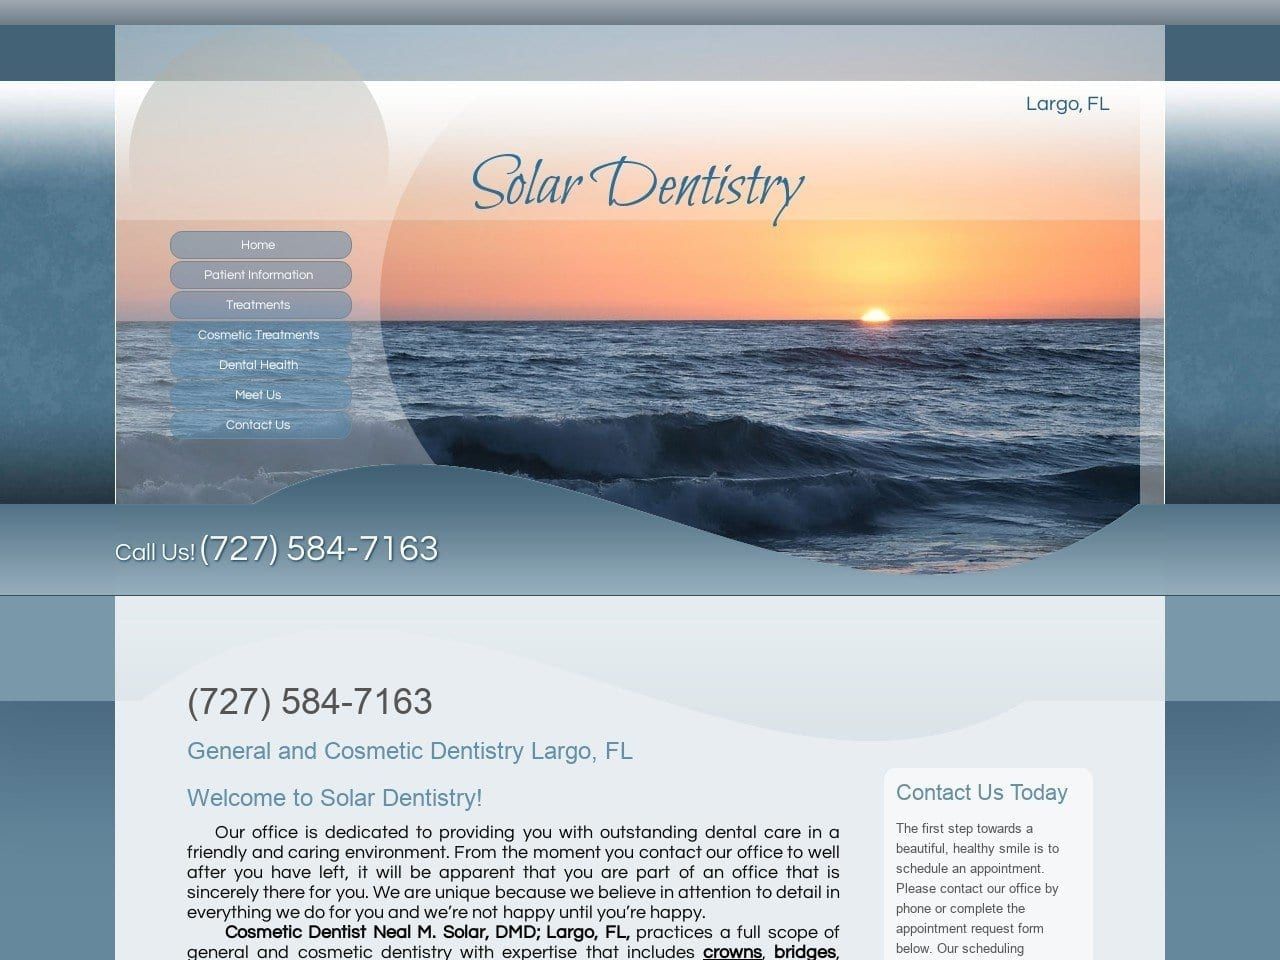 Solar Neal M DDS Website Screenshot from solardentistry.com